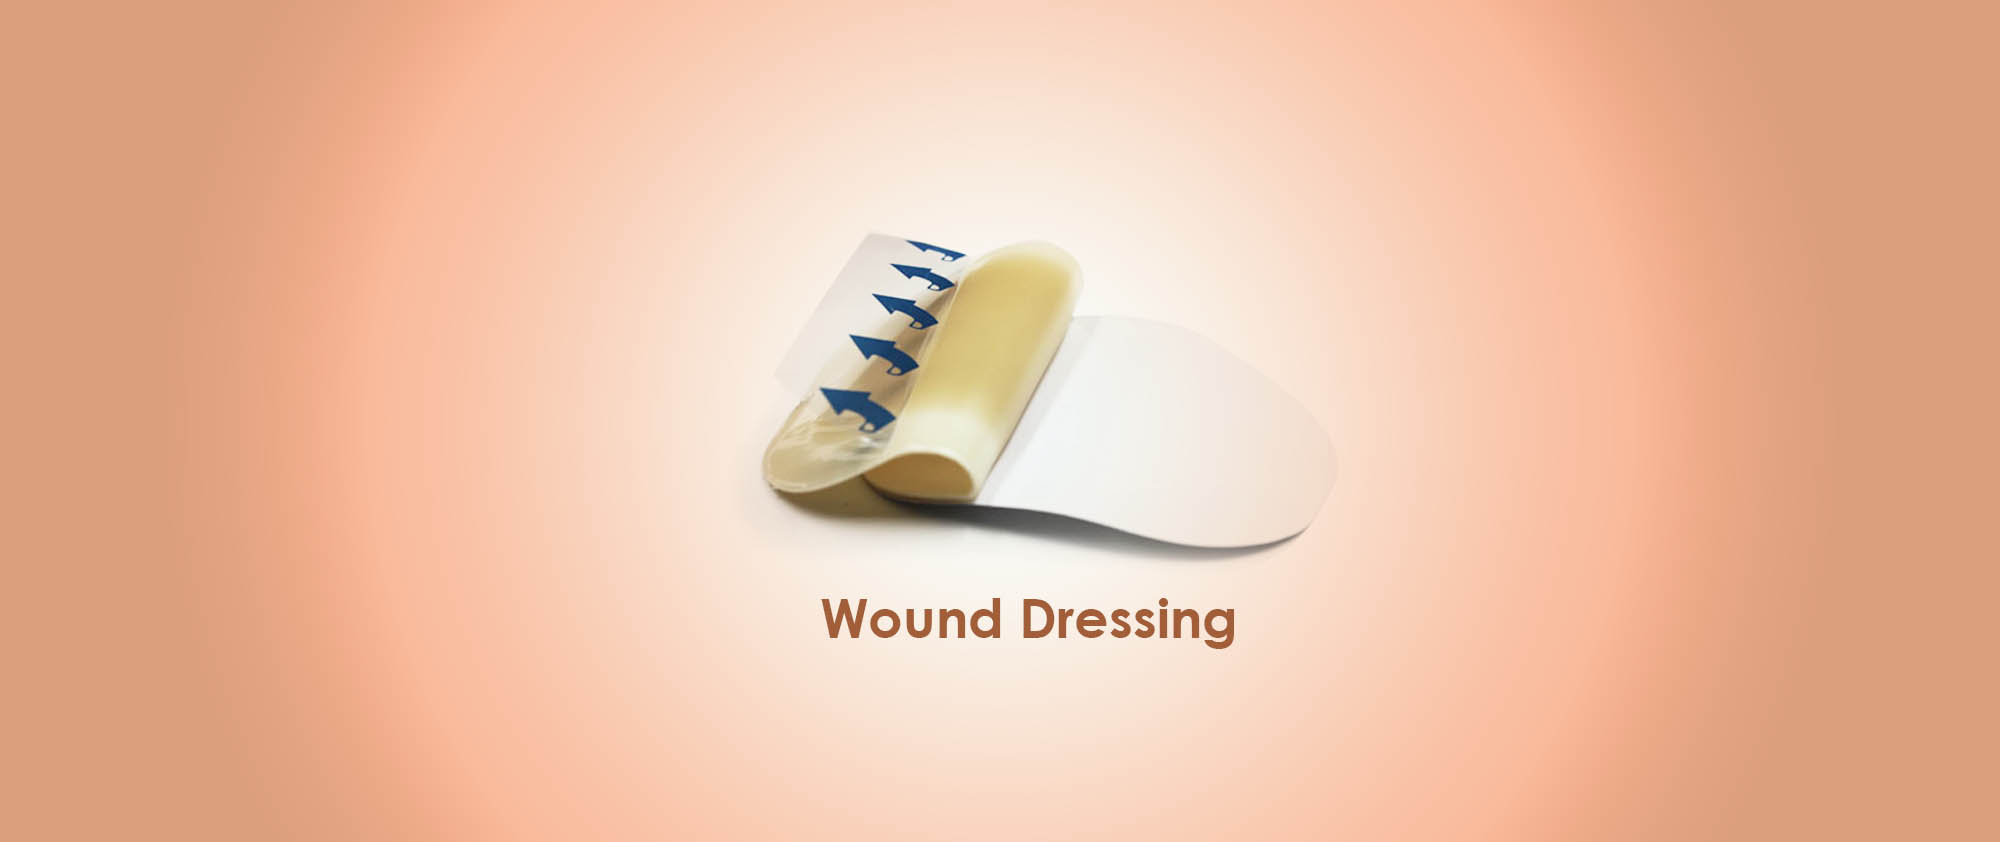 wound dressing